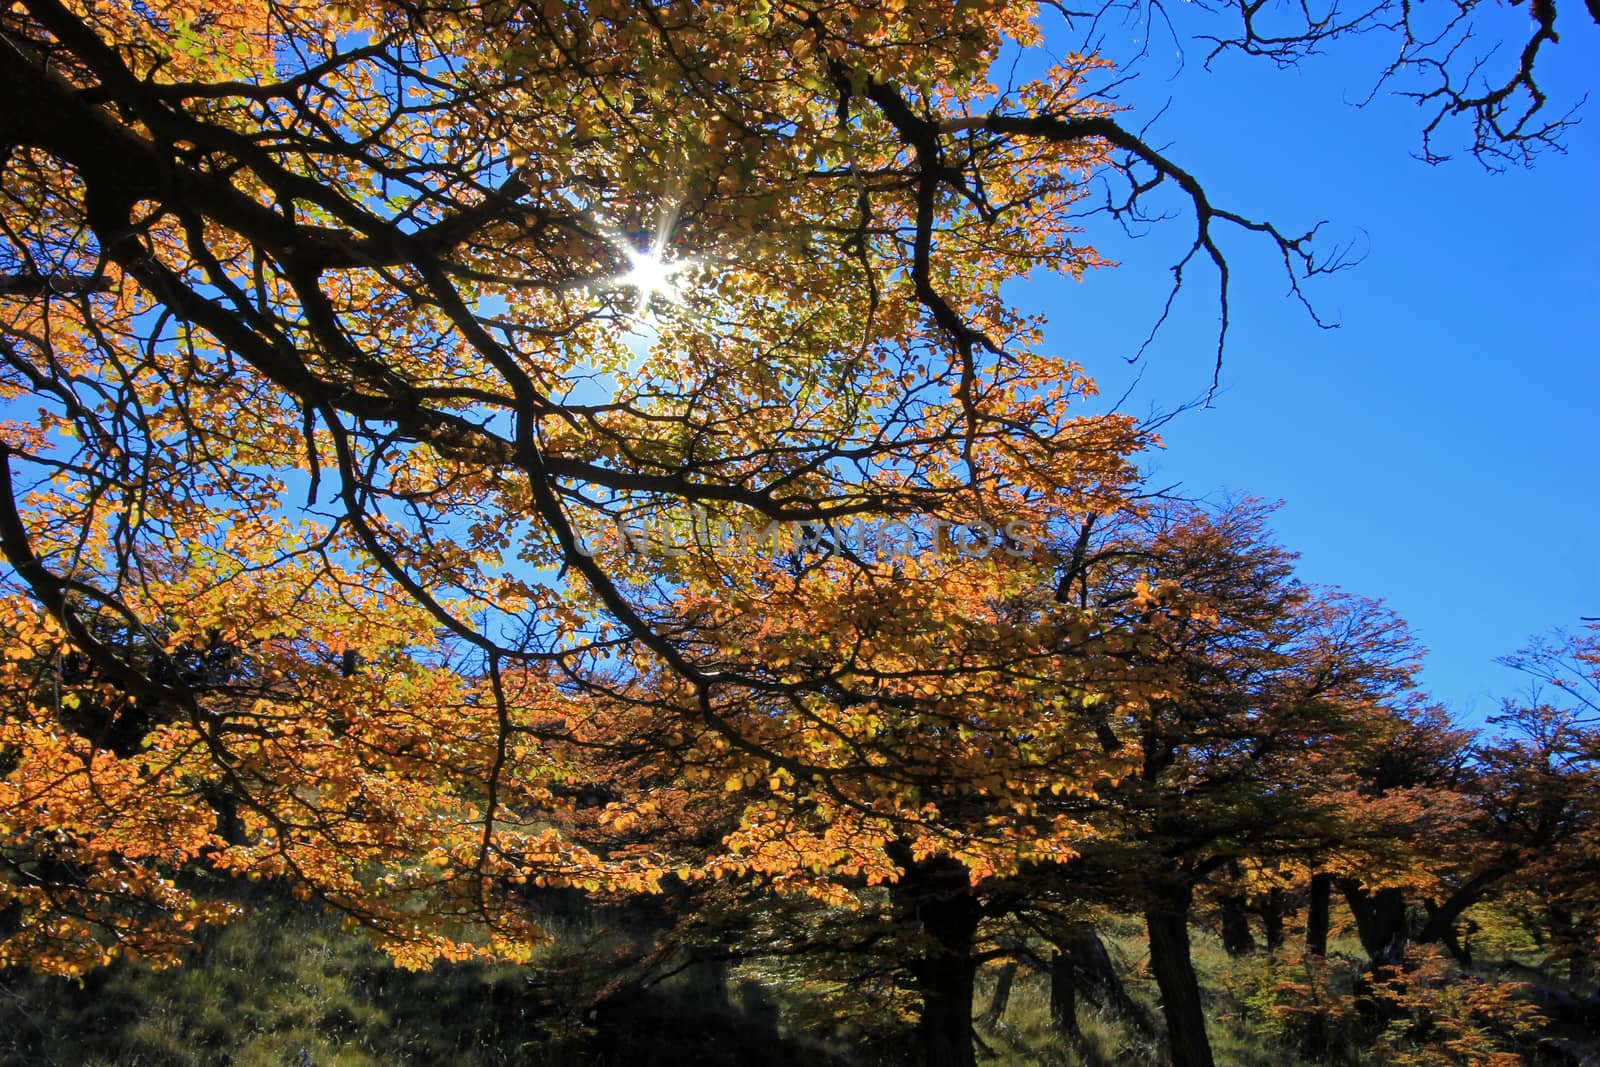 Golden forest trees near the Fitz Roy in autumn, El Chalten, Patagonia, Argentina